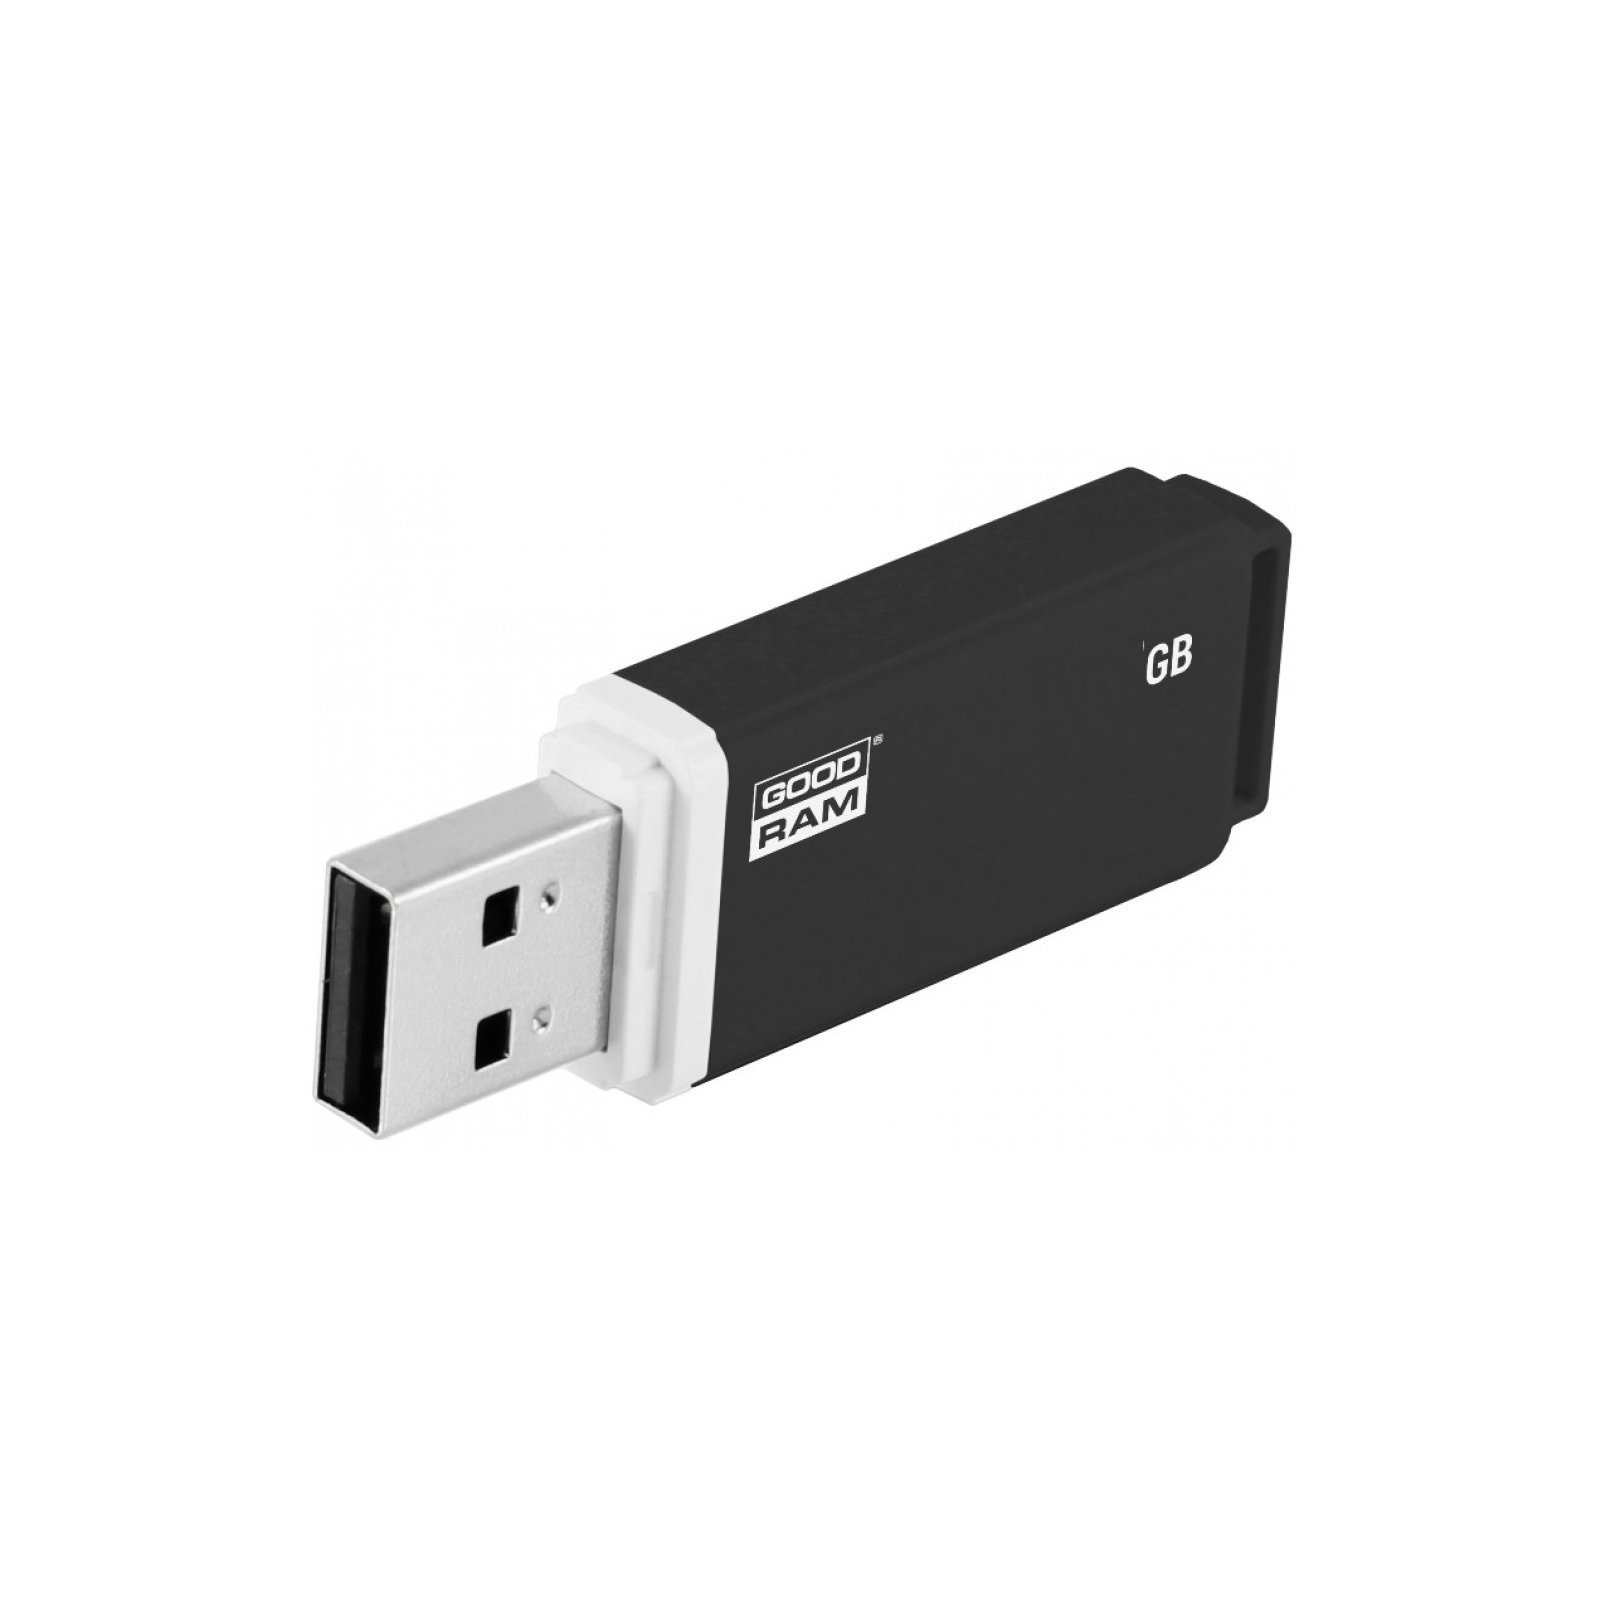 USB флеш накопитель Goodram 64GB UMO2 Graphite USB 2.0 (UMO2-0640E0R11) изображение 4